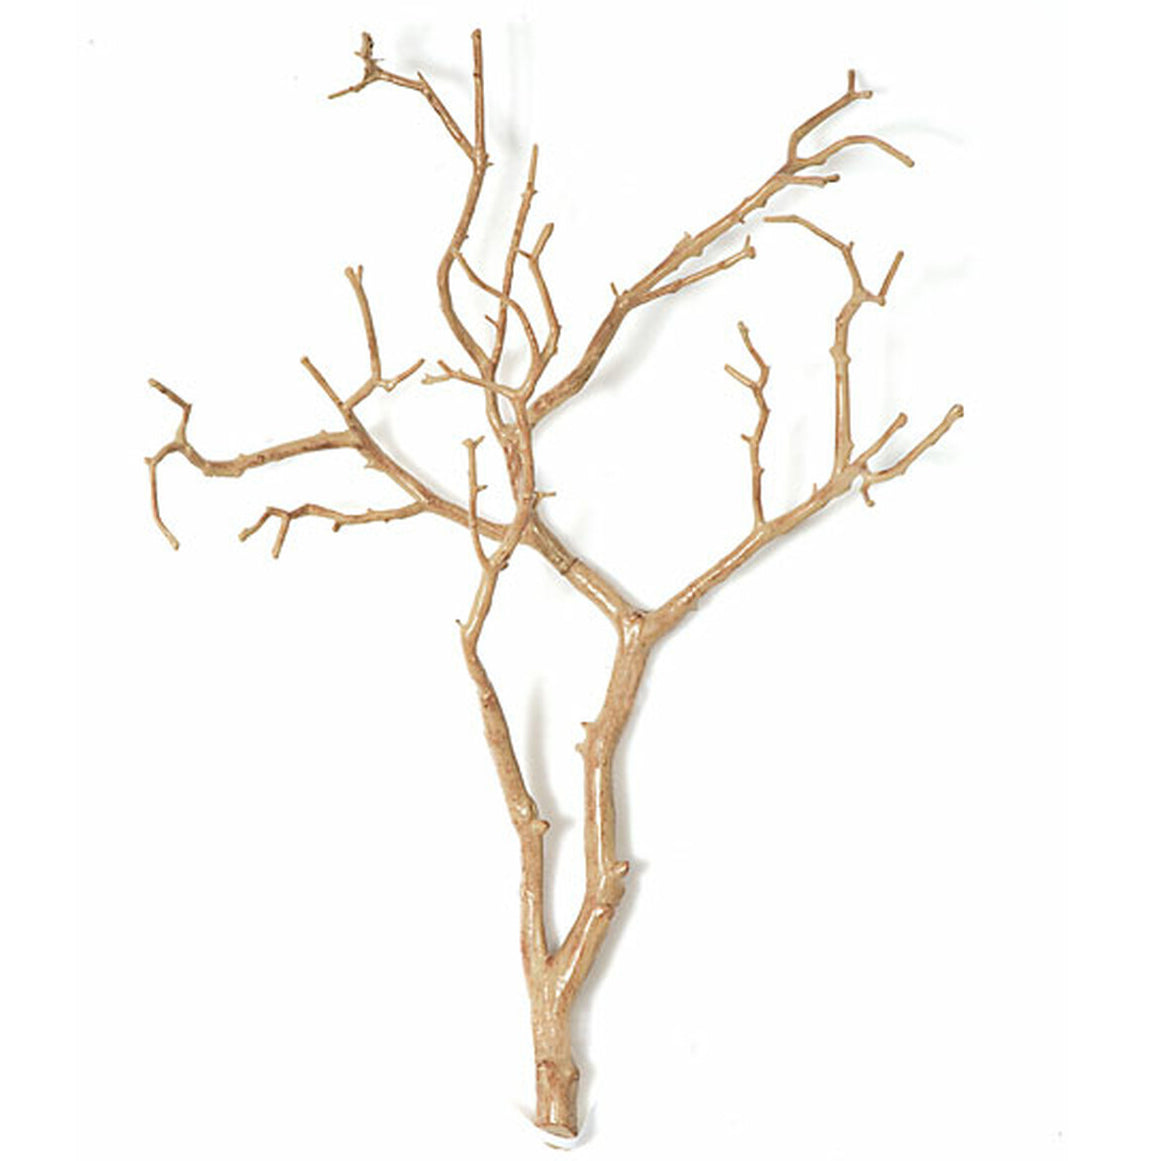 Twigs & Branch Stems